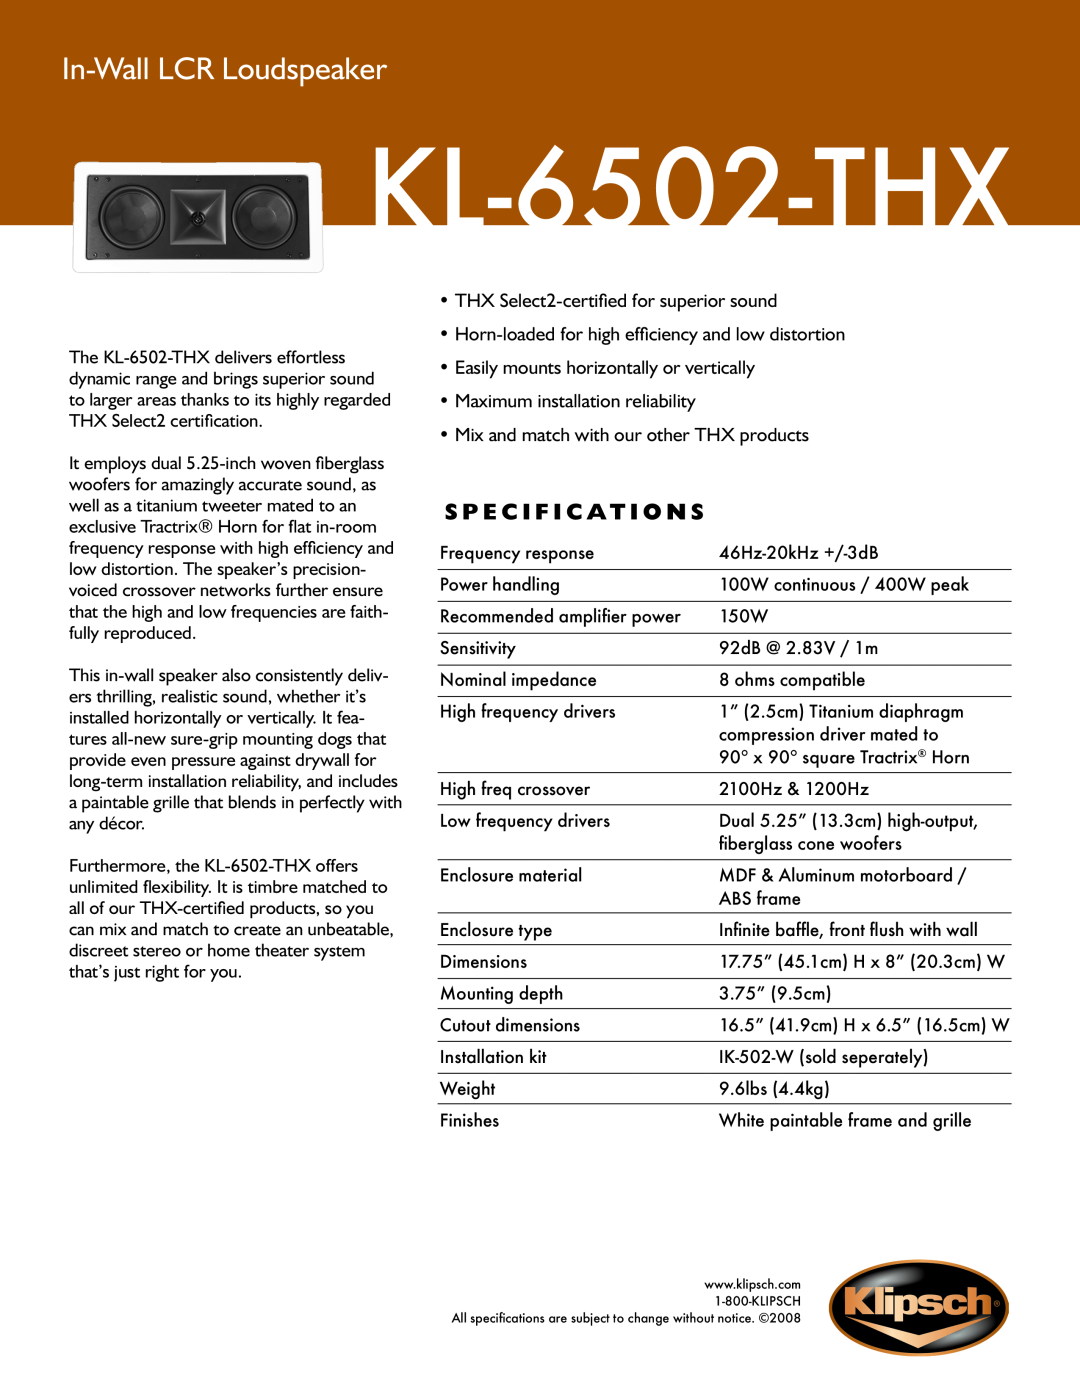 Klipsch KL-6502-THX specifications In-WallLCR Loudspeaker, S p e c i f i c a t i o n s 